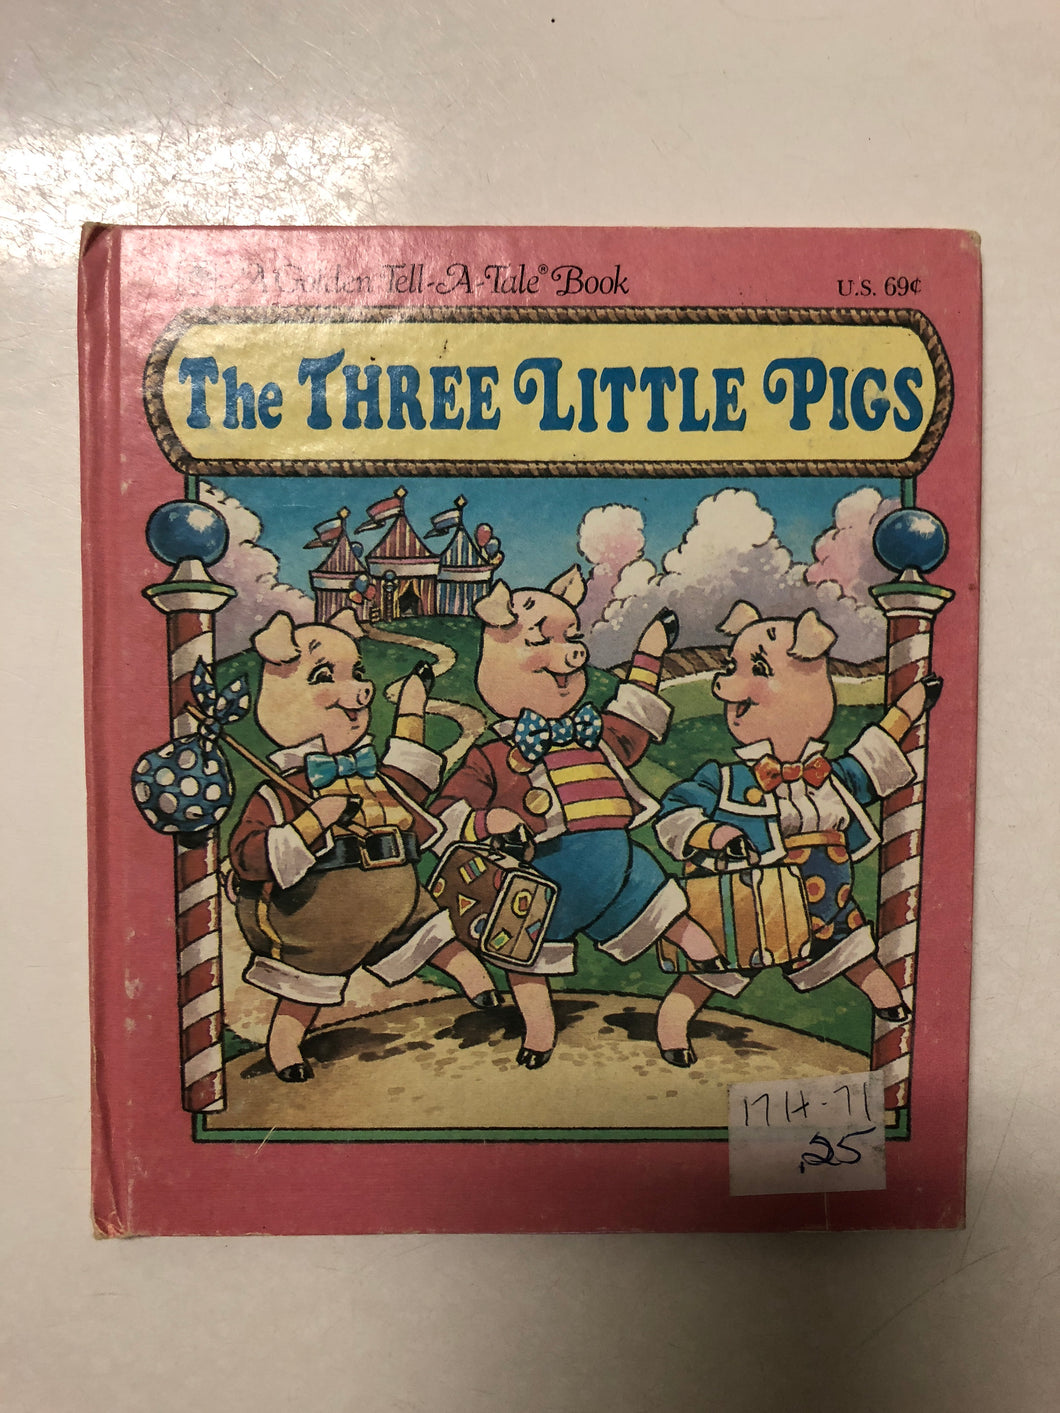 The Three Little Pigs - Slick Cat Books 